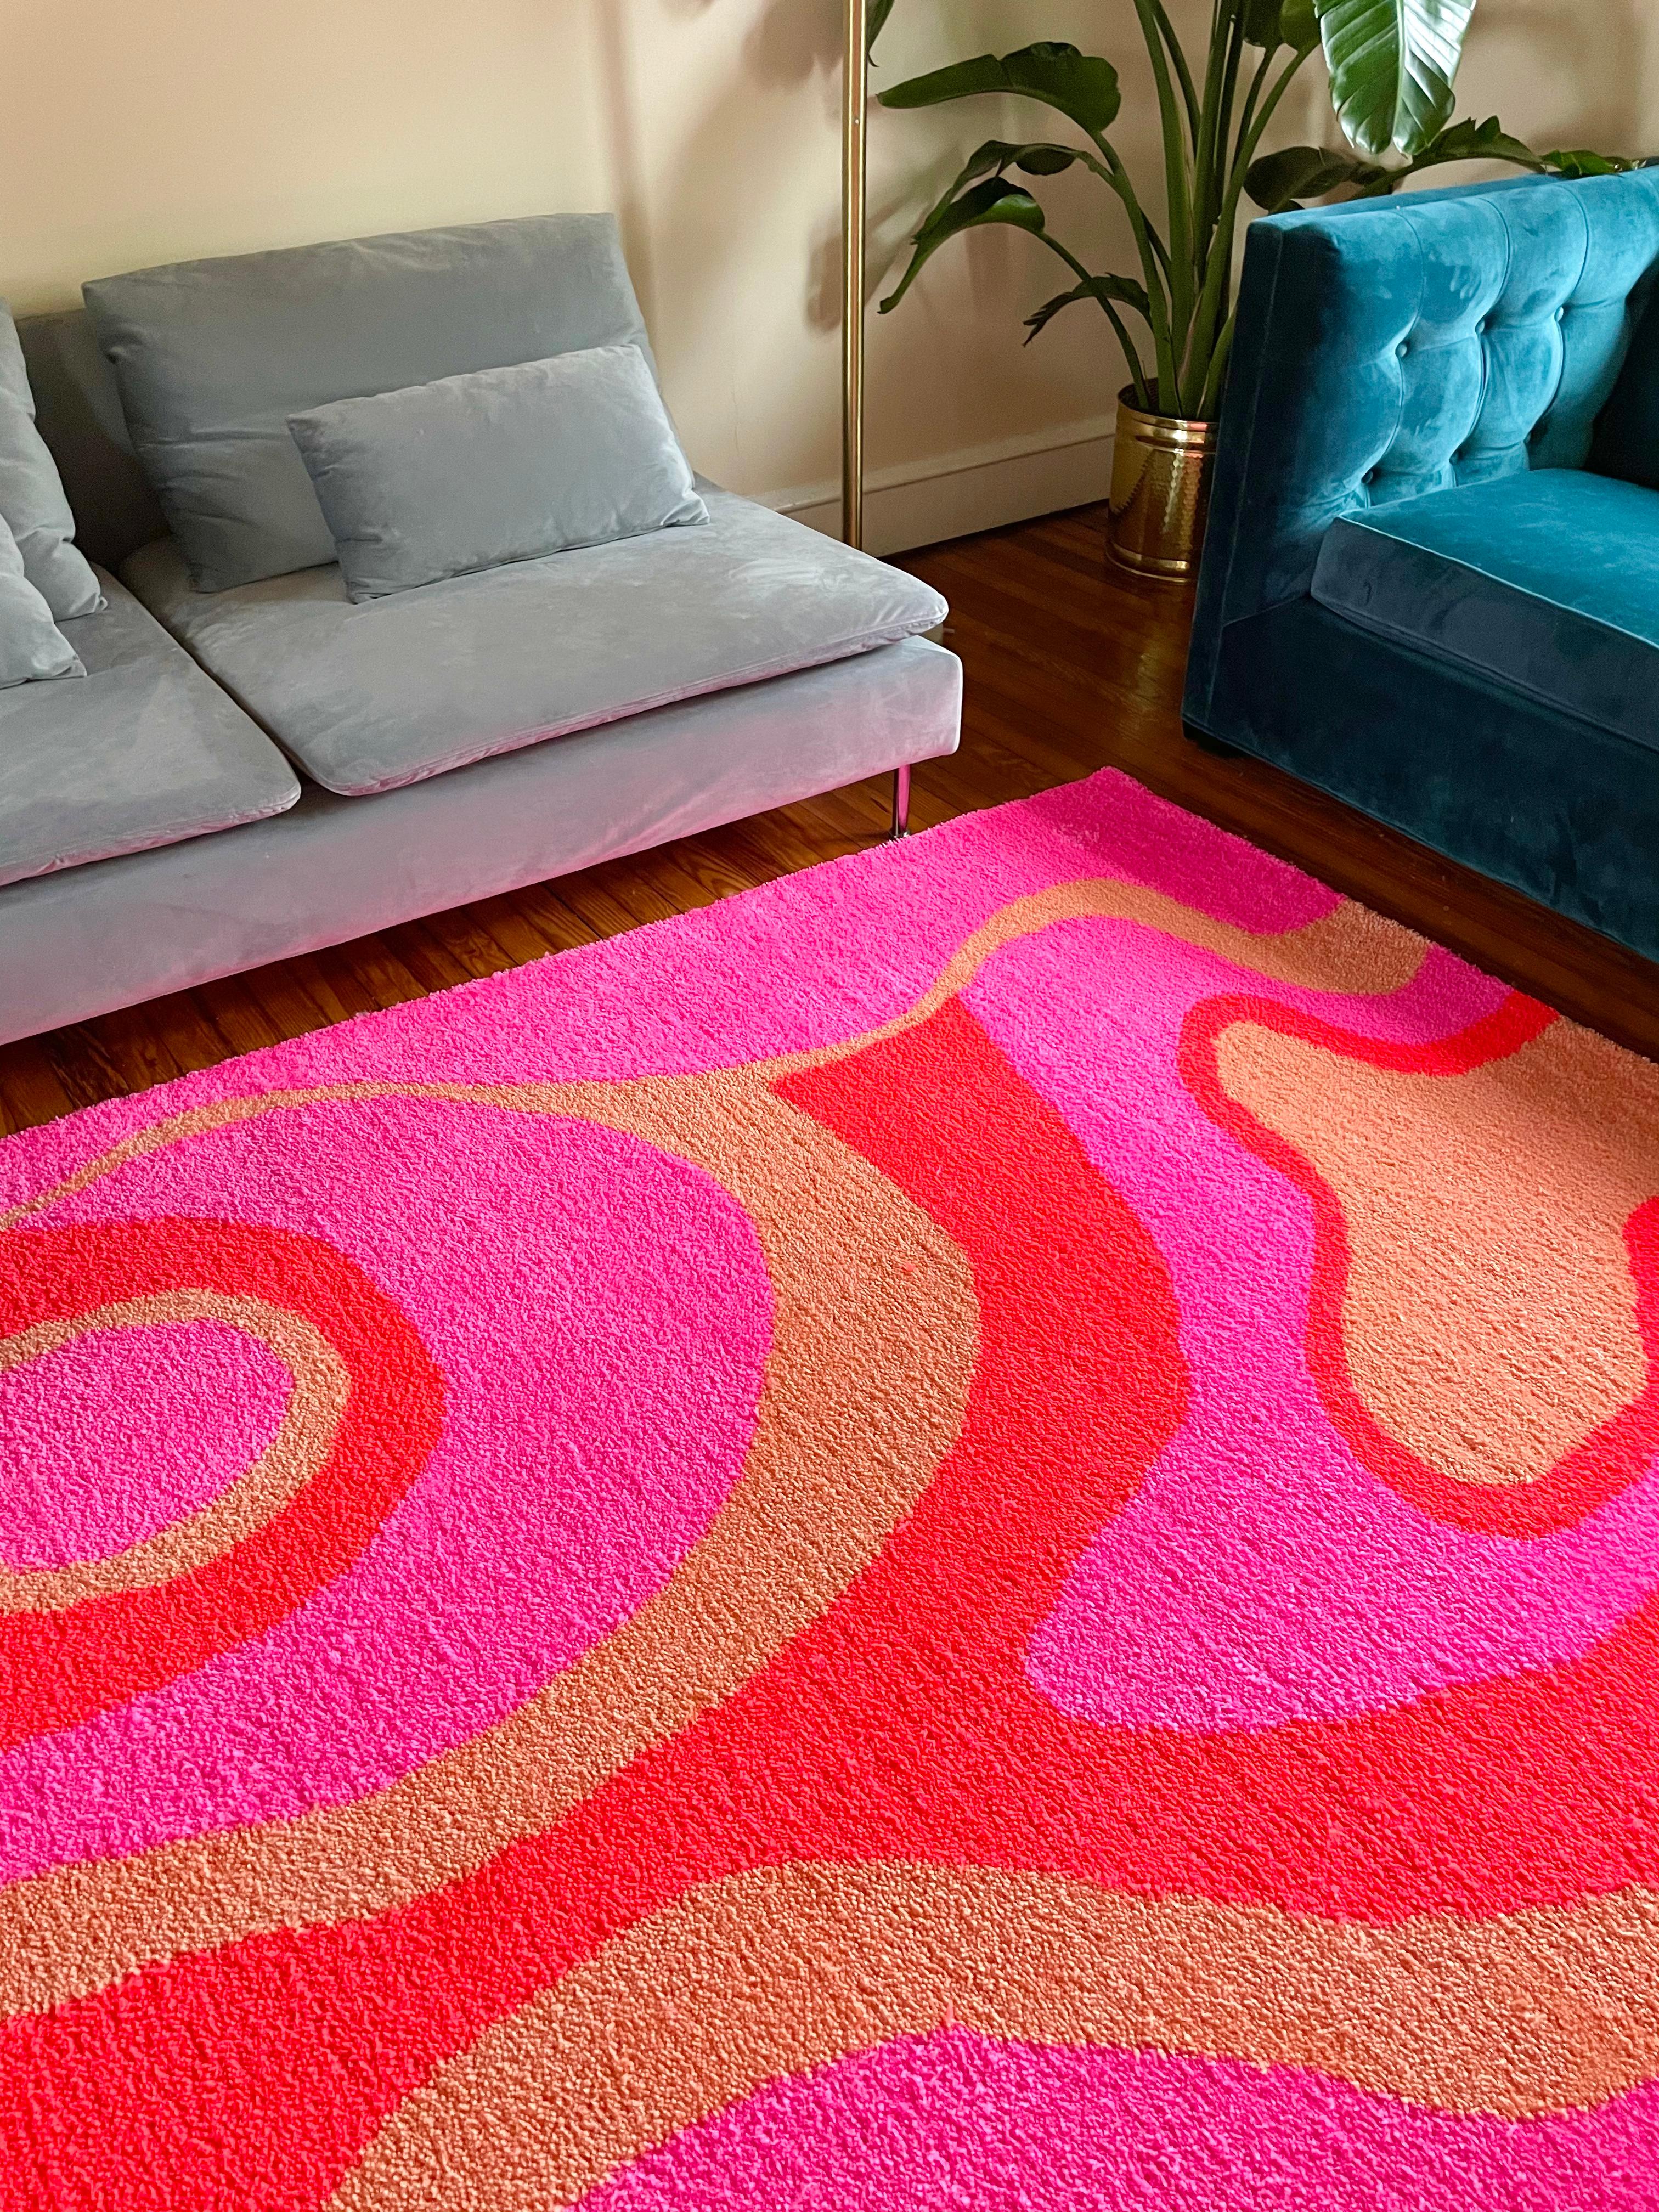 orange and pink rug